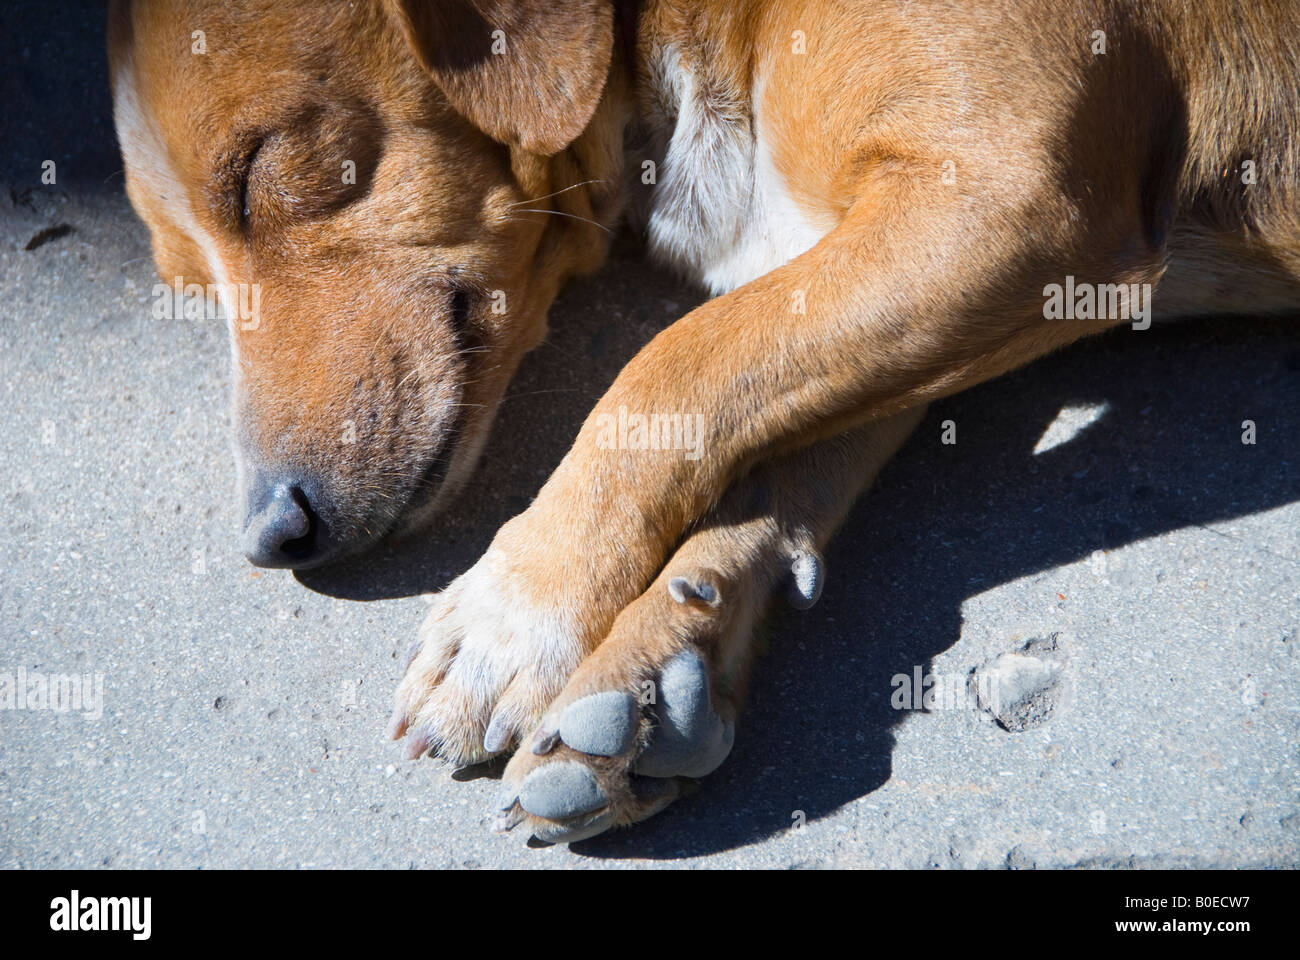 A sleeping dog Stock Photo